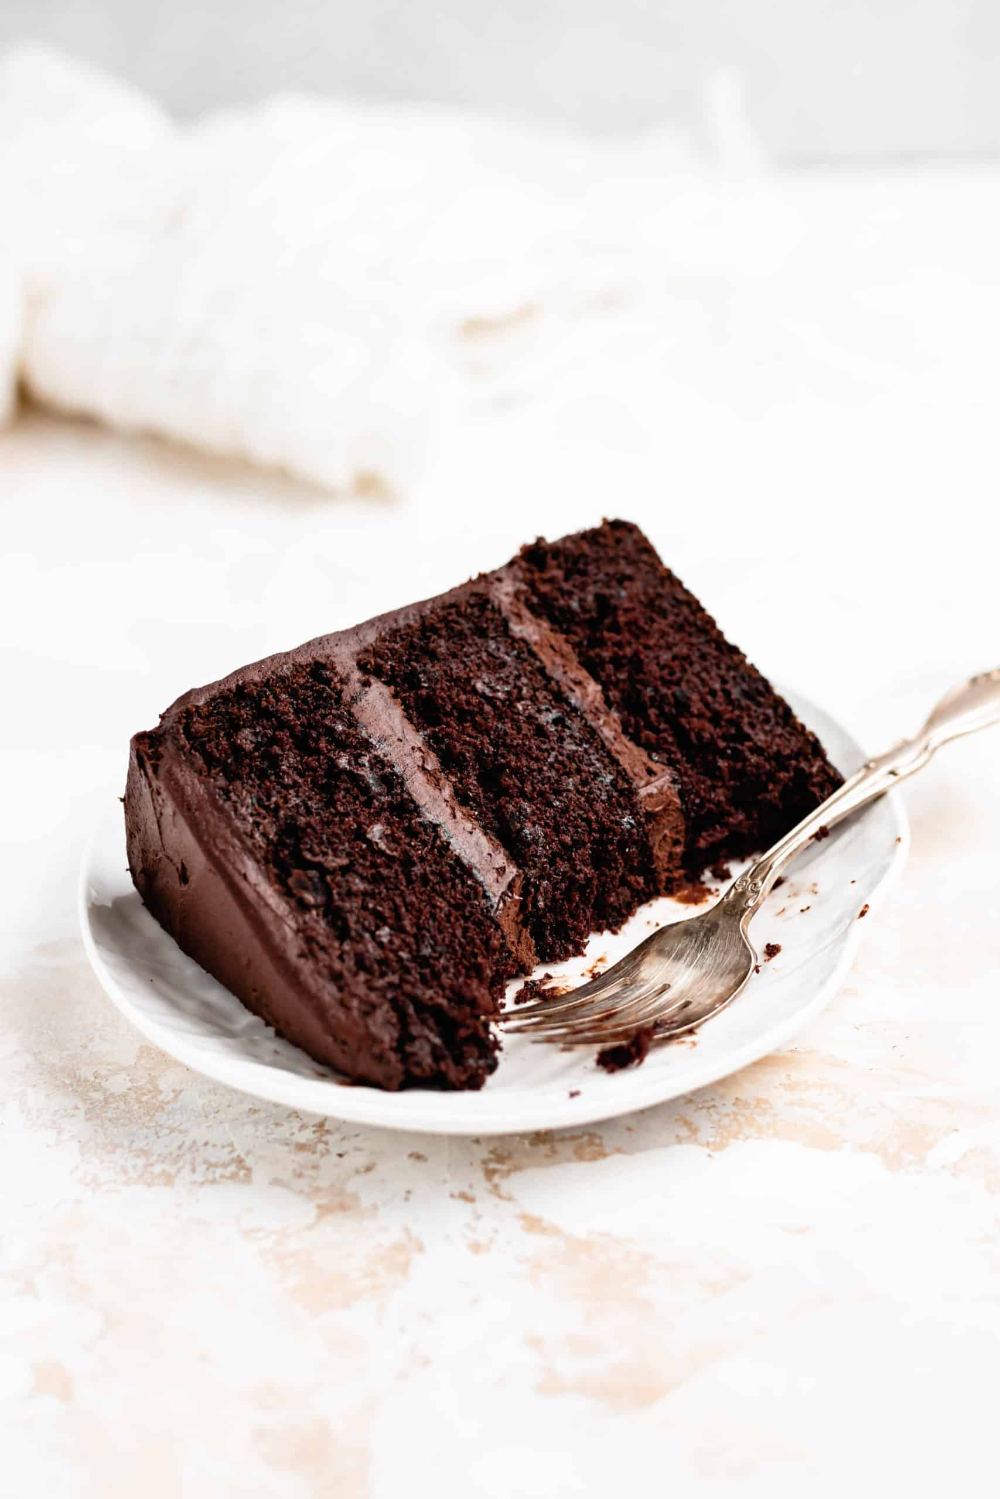 18 chocolate cake Aesthetic ideas